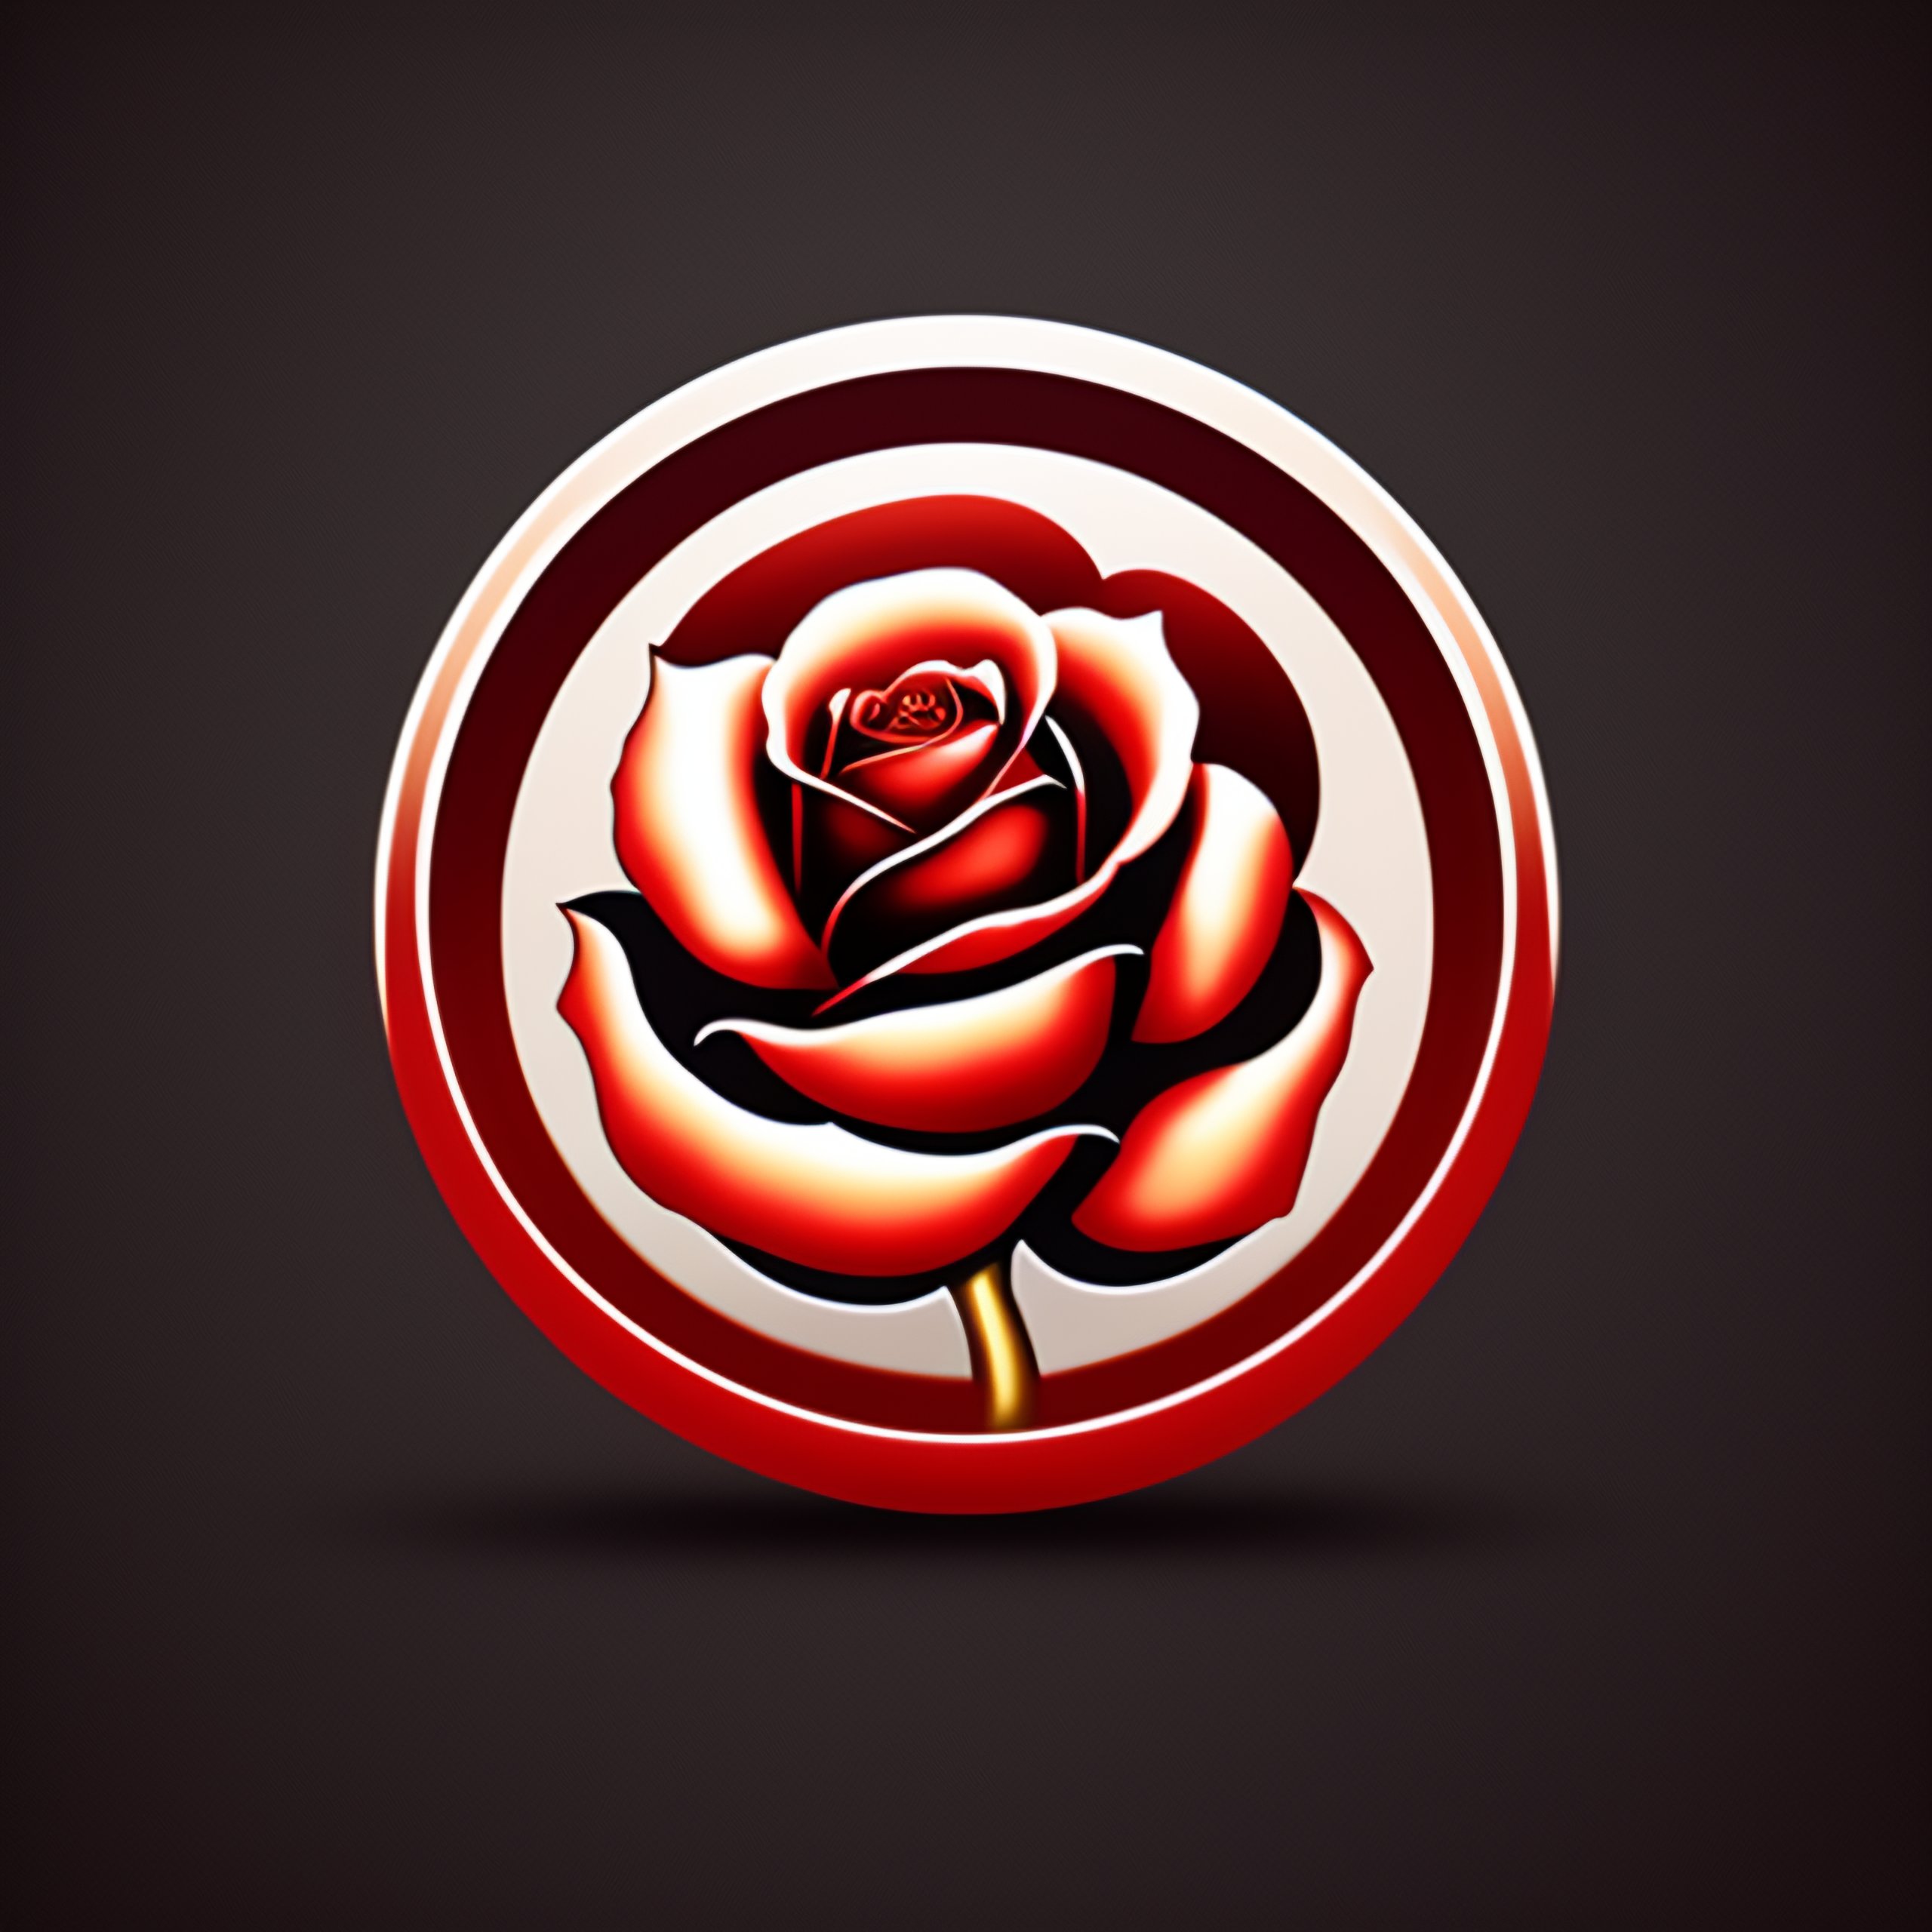 rose vector logo